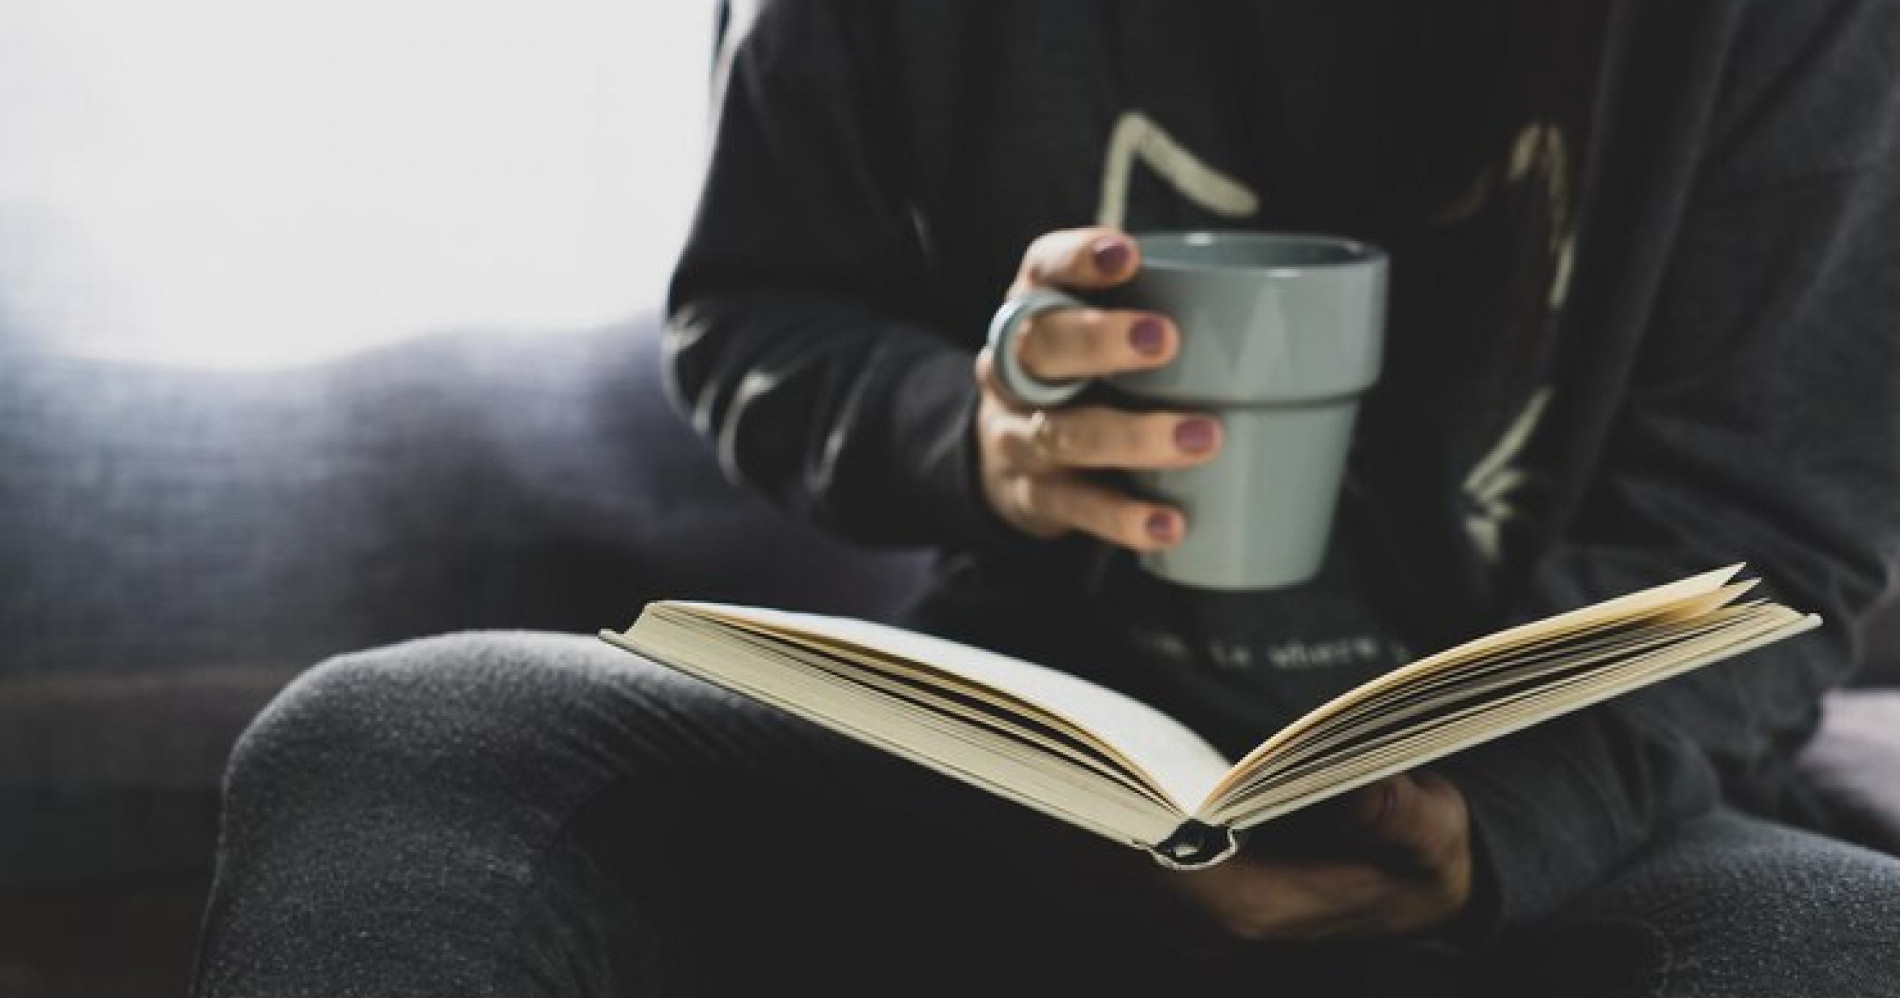 Membaca buku dengan secangkir kopi dapat memberikan inspirasi (Sumber Gambar: Freepik)